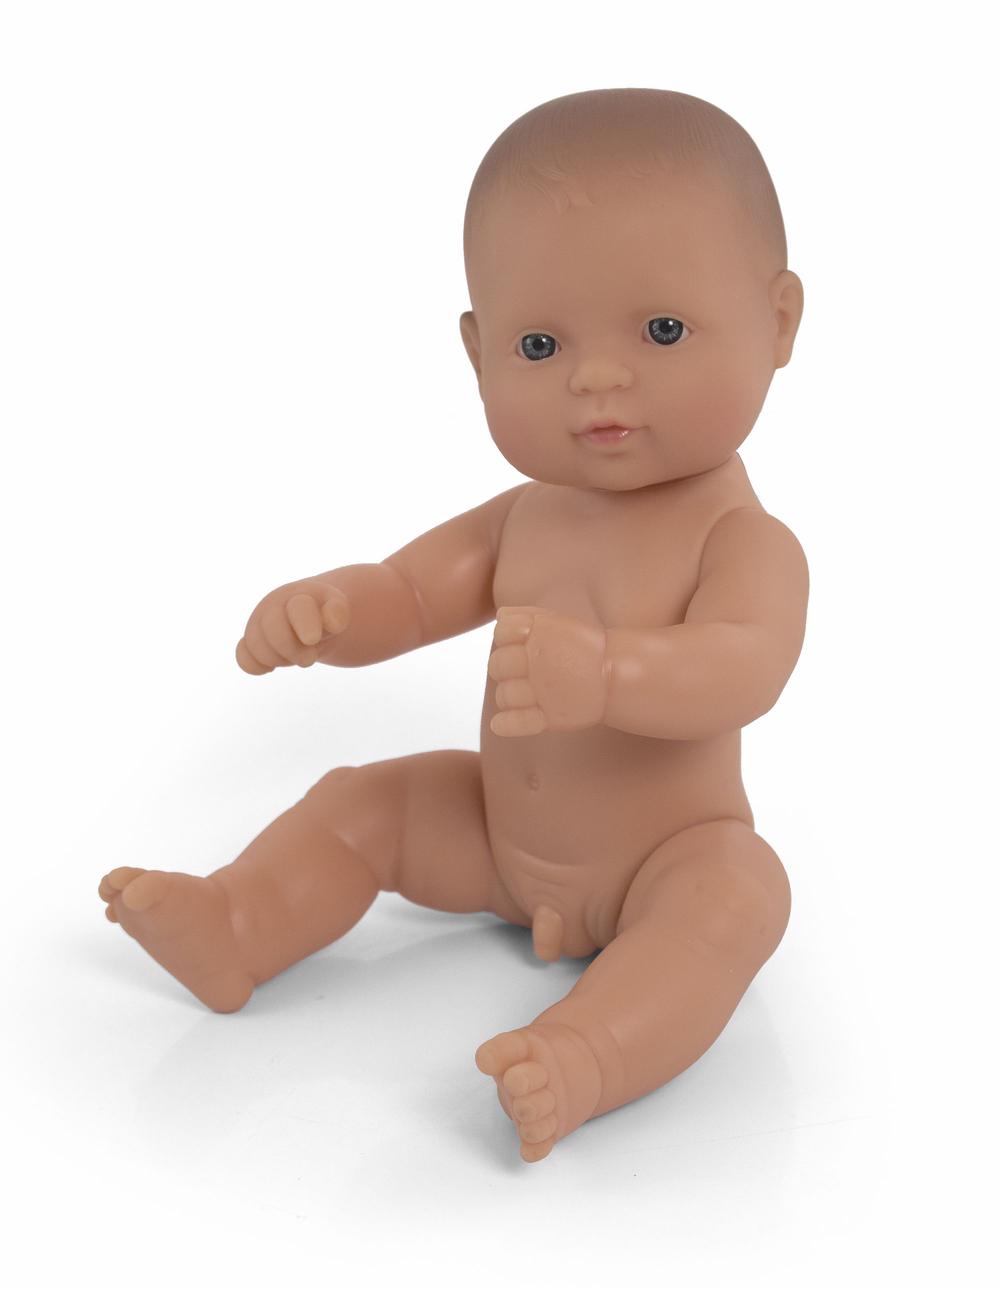 anatomically correct baby dolls